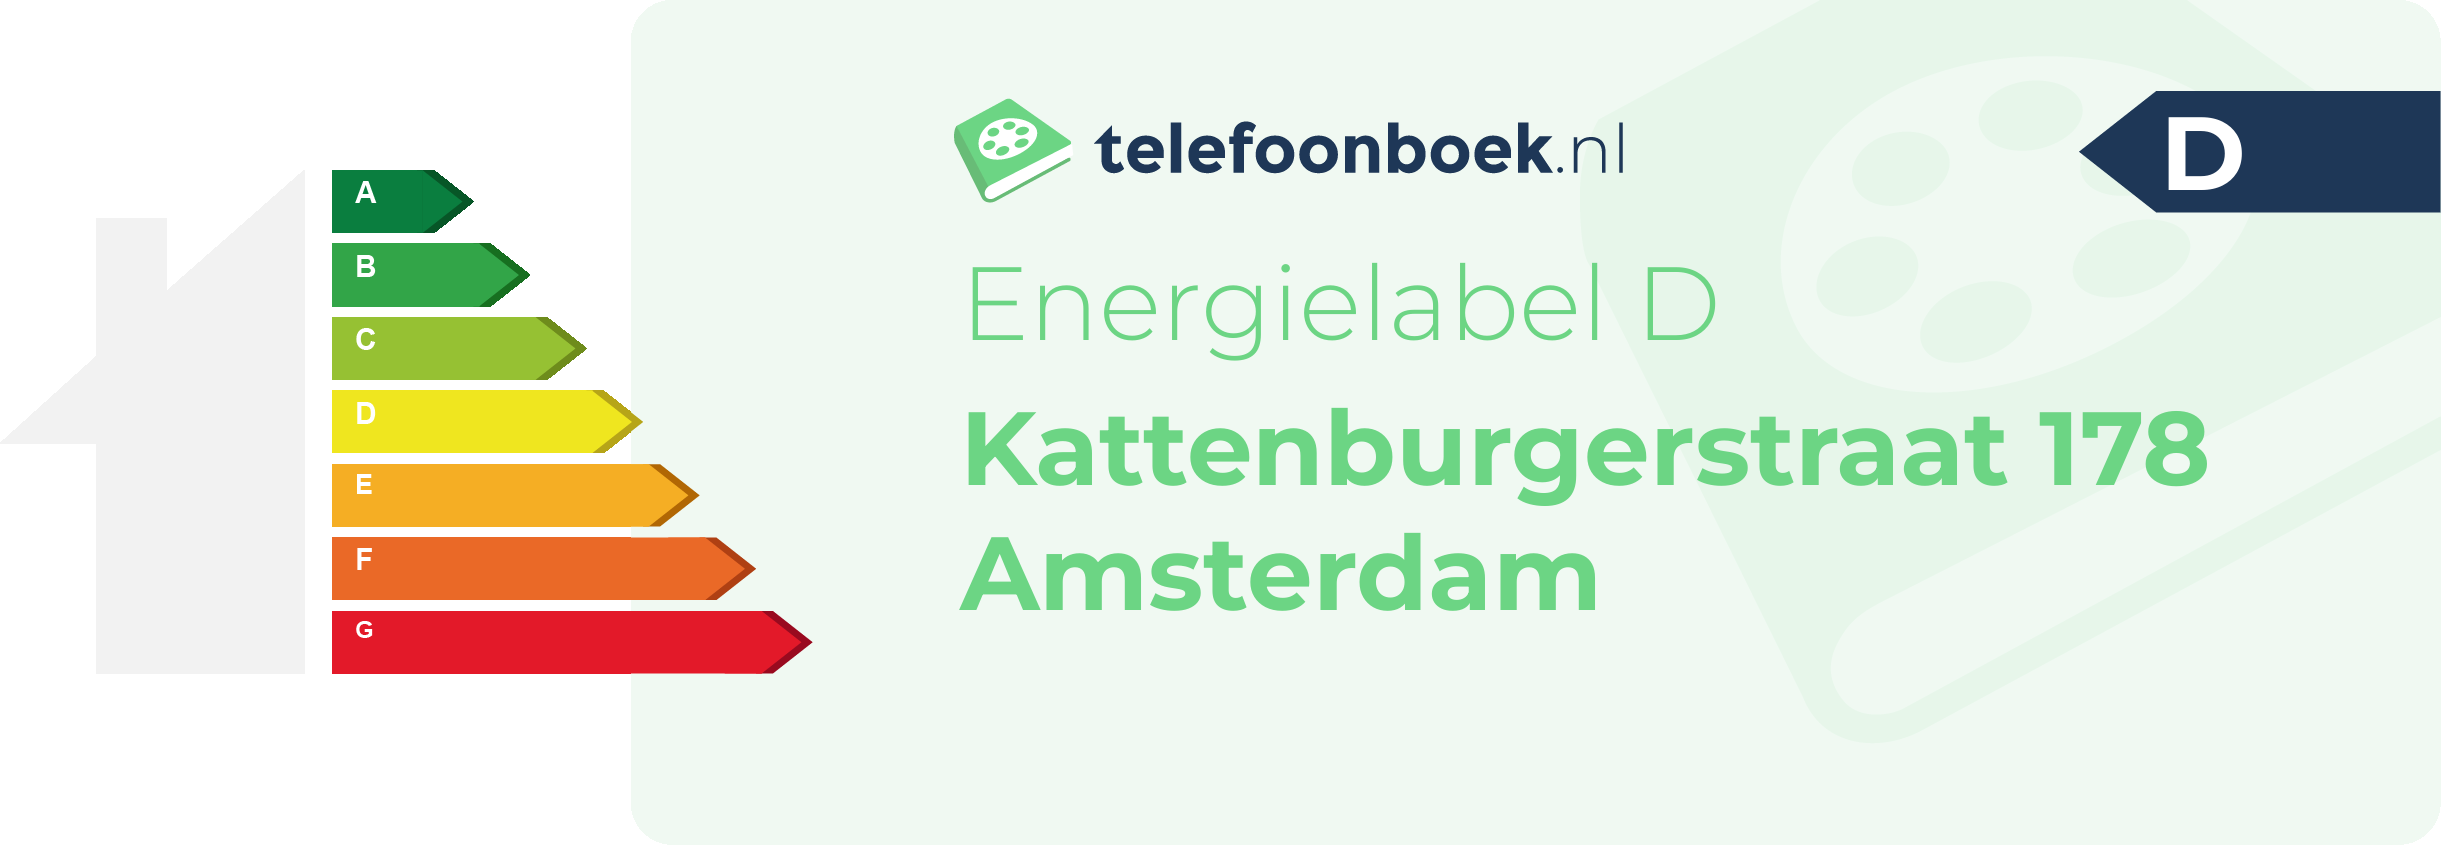 Energielabel Kattenburgerstraat 178 Amsterdam